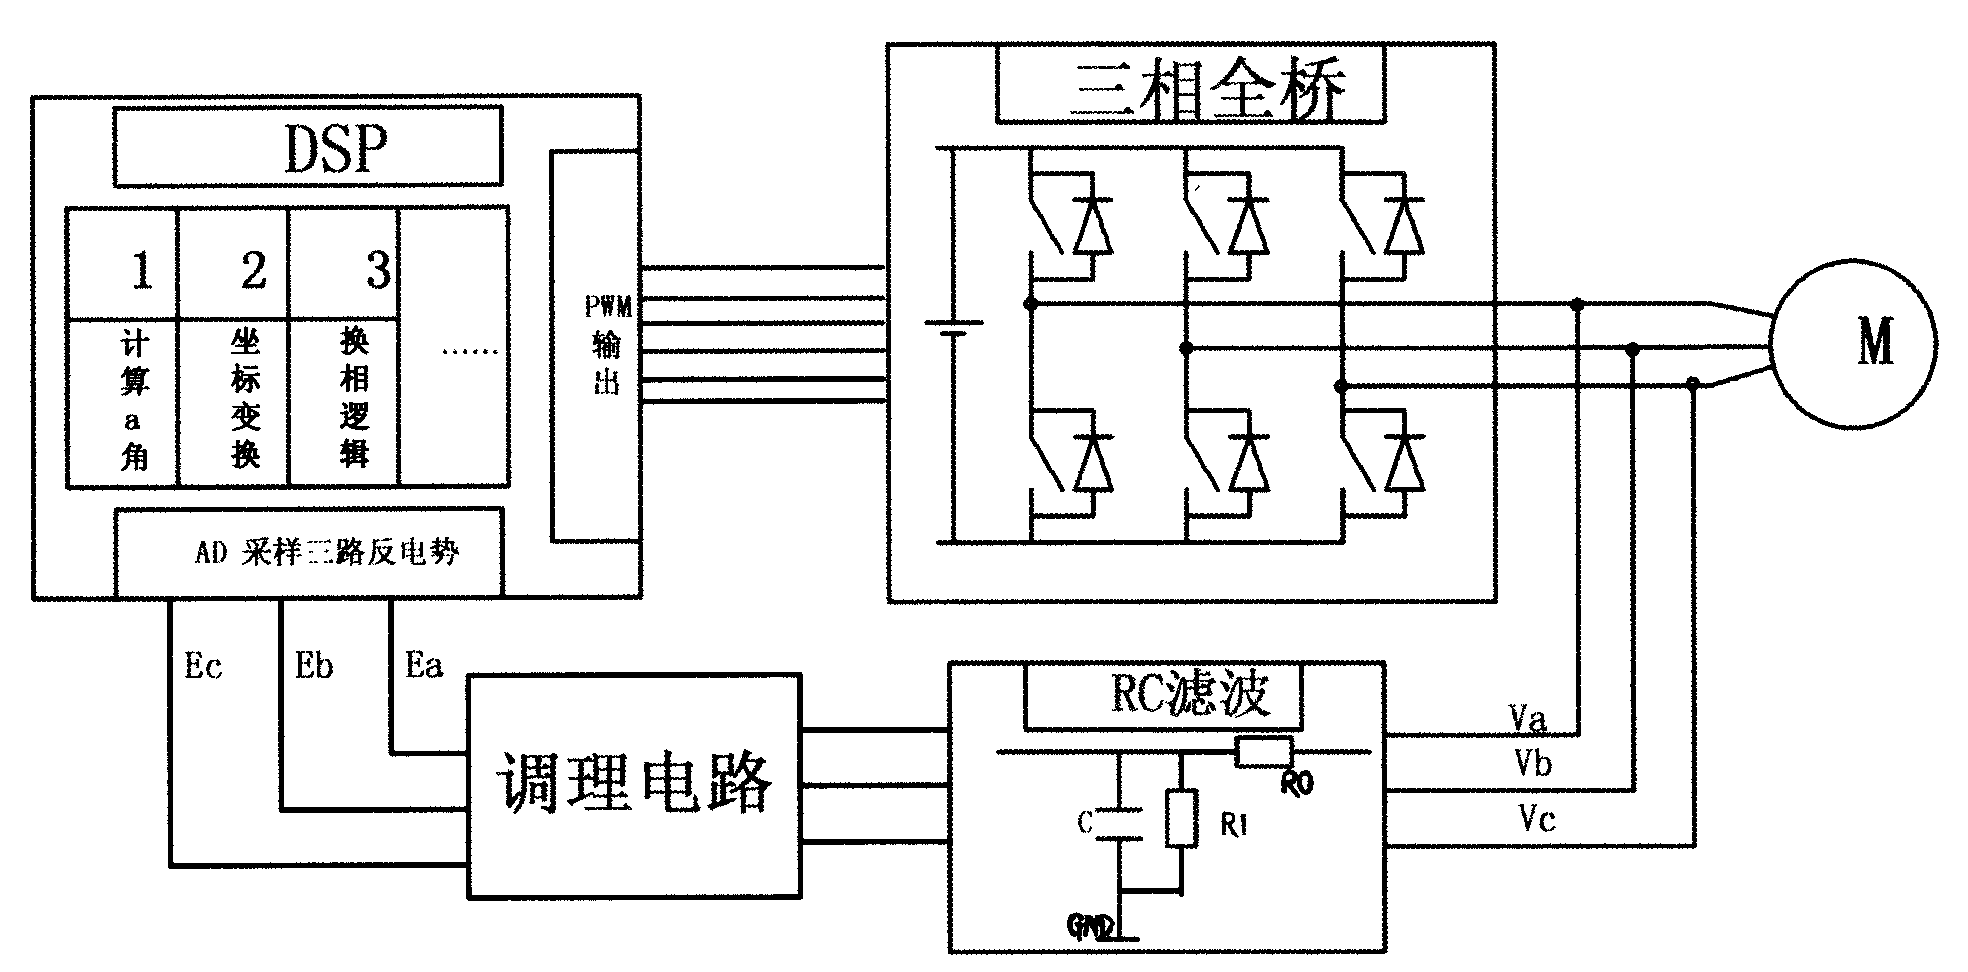 Control method of brushless DC motor (BLDC) position signal phase error based on back EMF zero crossing point reconstruction